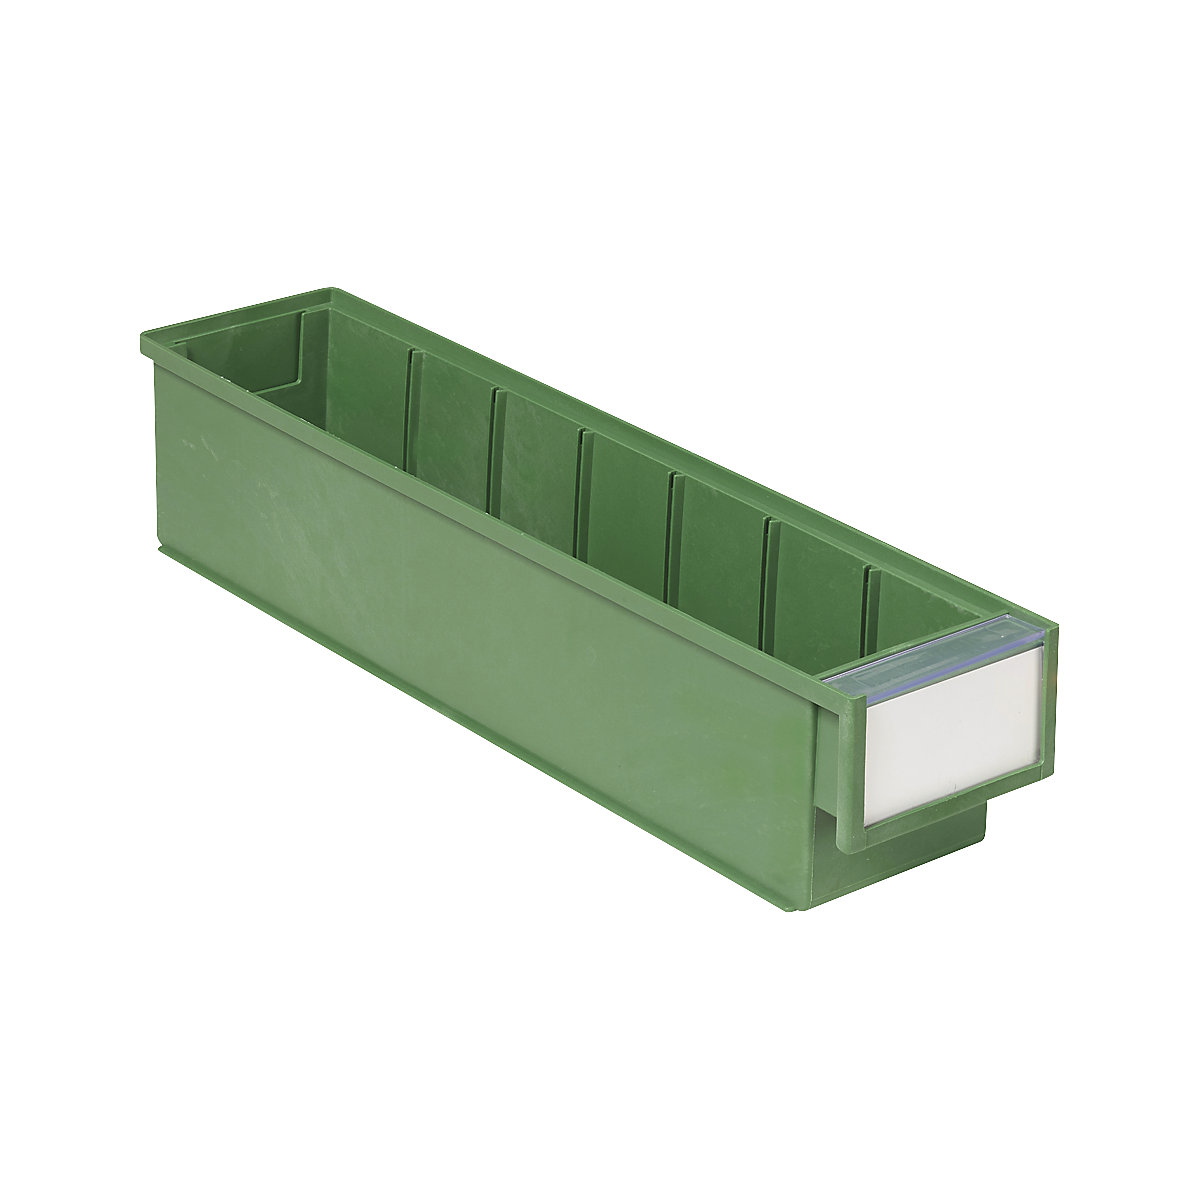 BiOX állványdoboz – Treston, zöld, h x szé x ma 400 x 90 x 82 mm, cs. e. 30 db-6